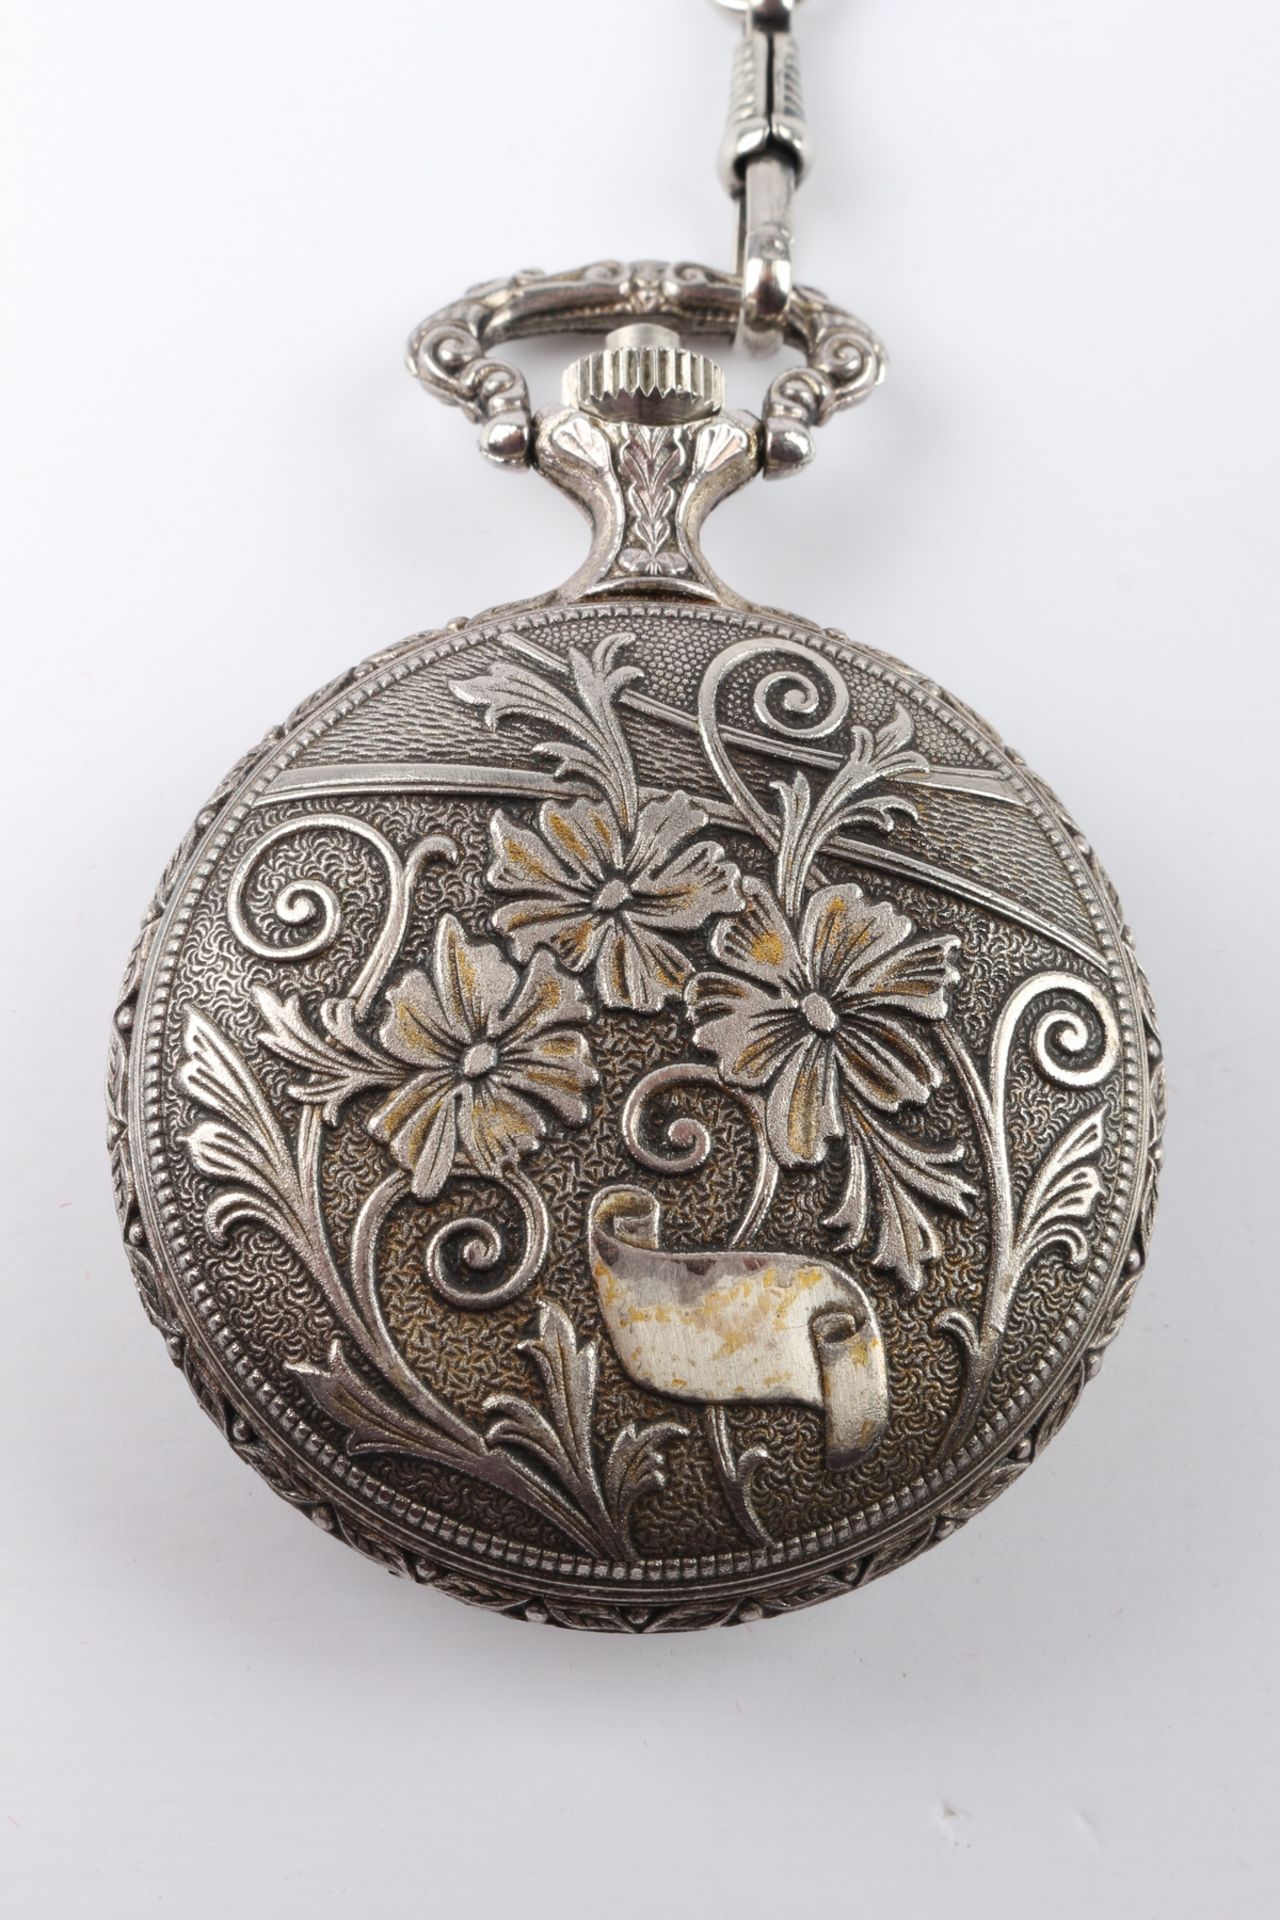 Jugendstil 2 Silber Taschenuhren, art nouveau silver pocket watches, - Image 5 of 9